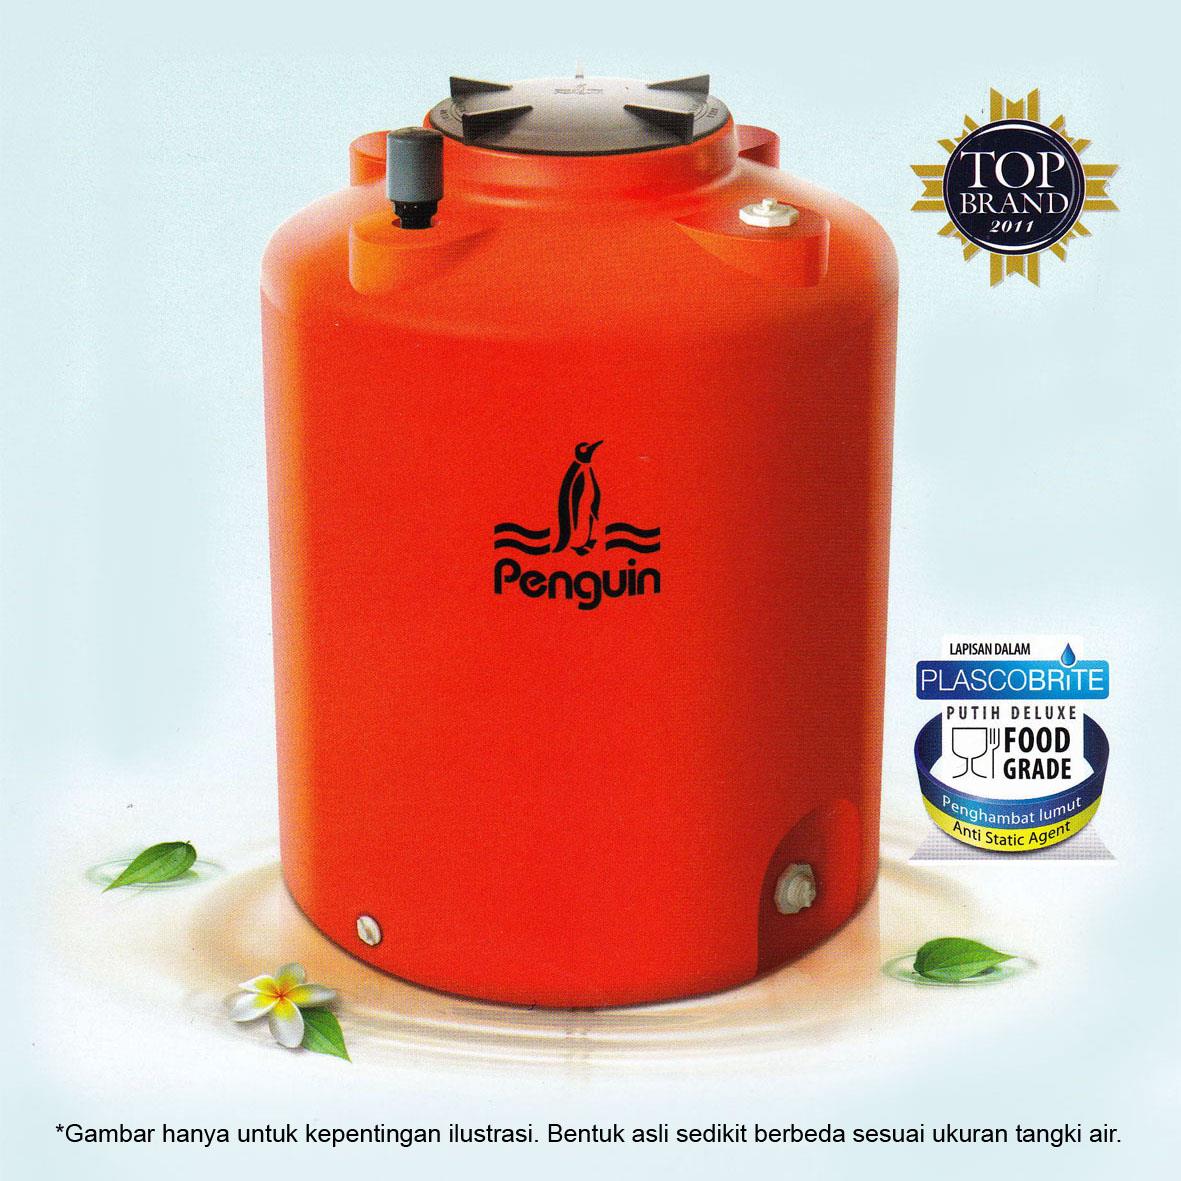 Ukuran Tandon Air Penguin : Ukuran Tandon Air Penguin 1050 Liter - ma8816p